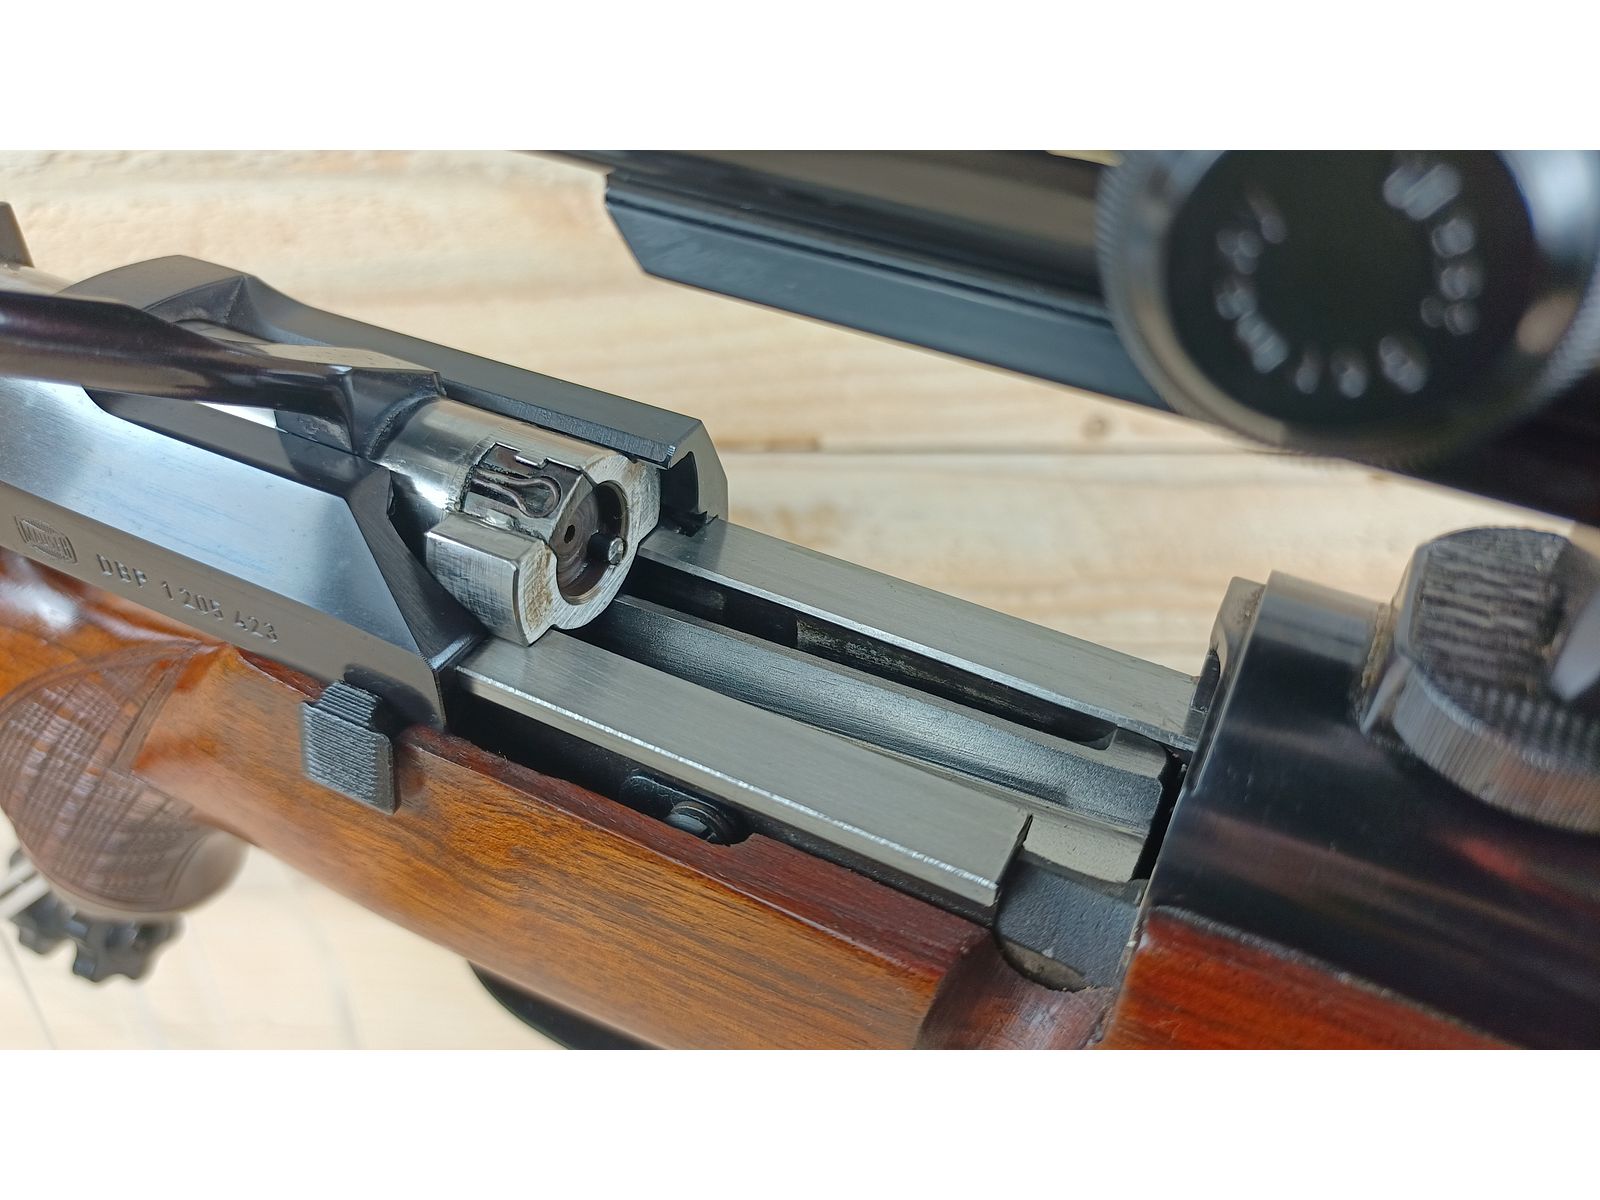 Repetierbüchse Mauser Mod. 66, Kal. 7x64 *mit Zeiss DIATAL-D* - im Bestzustand!